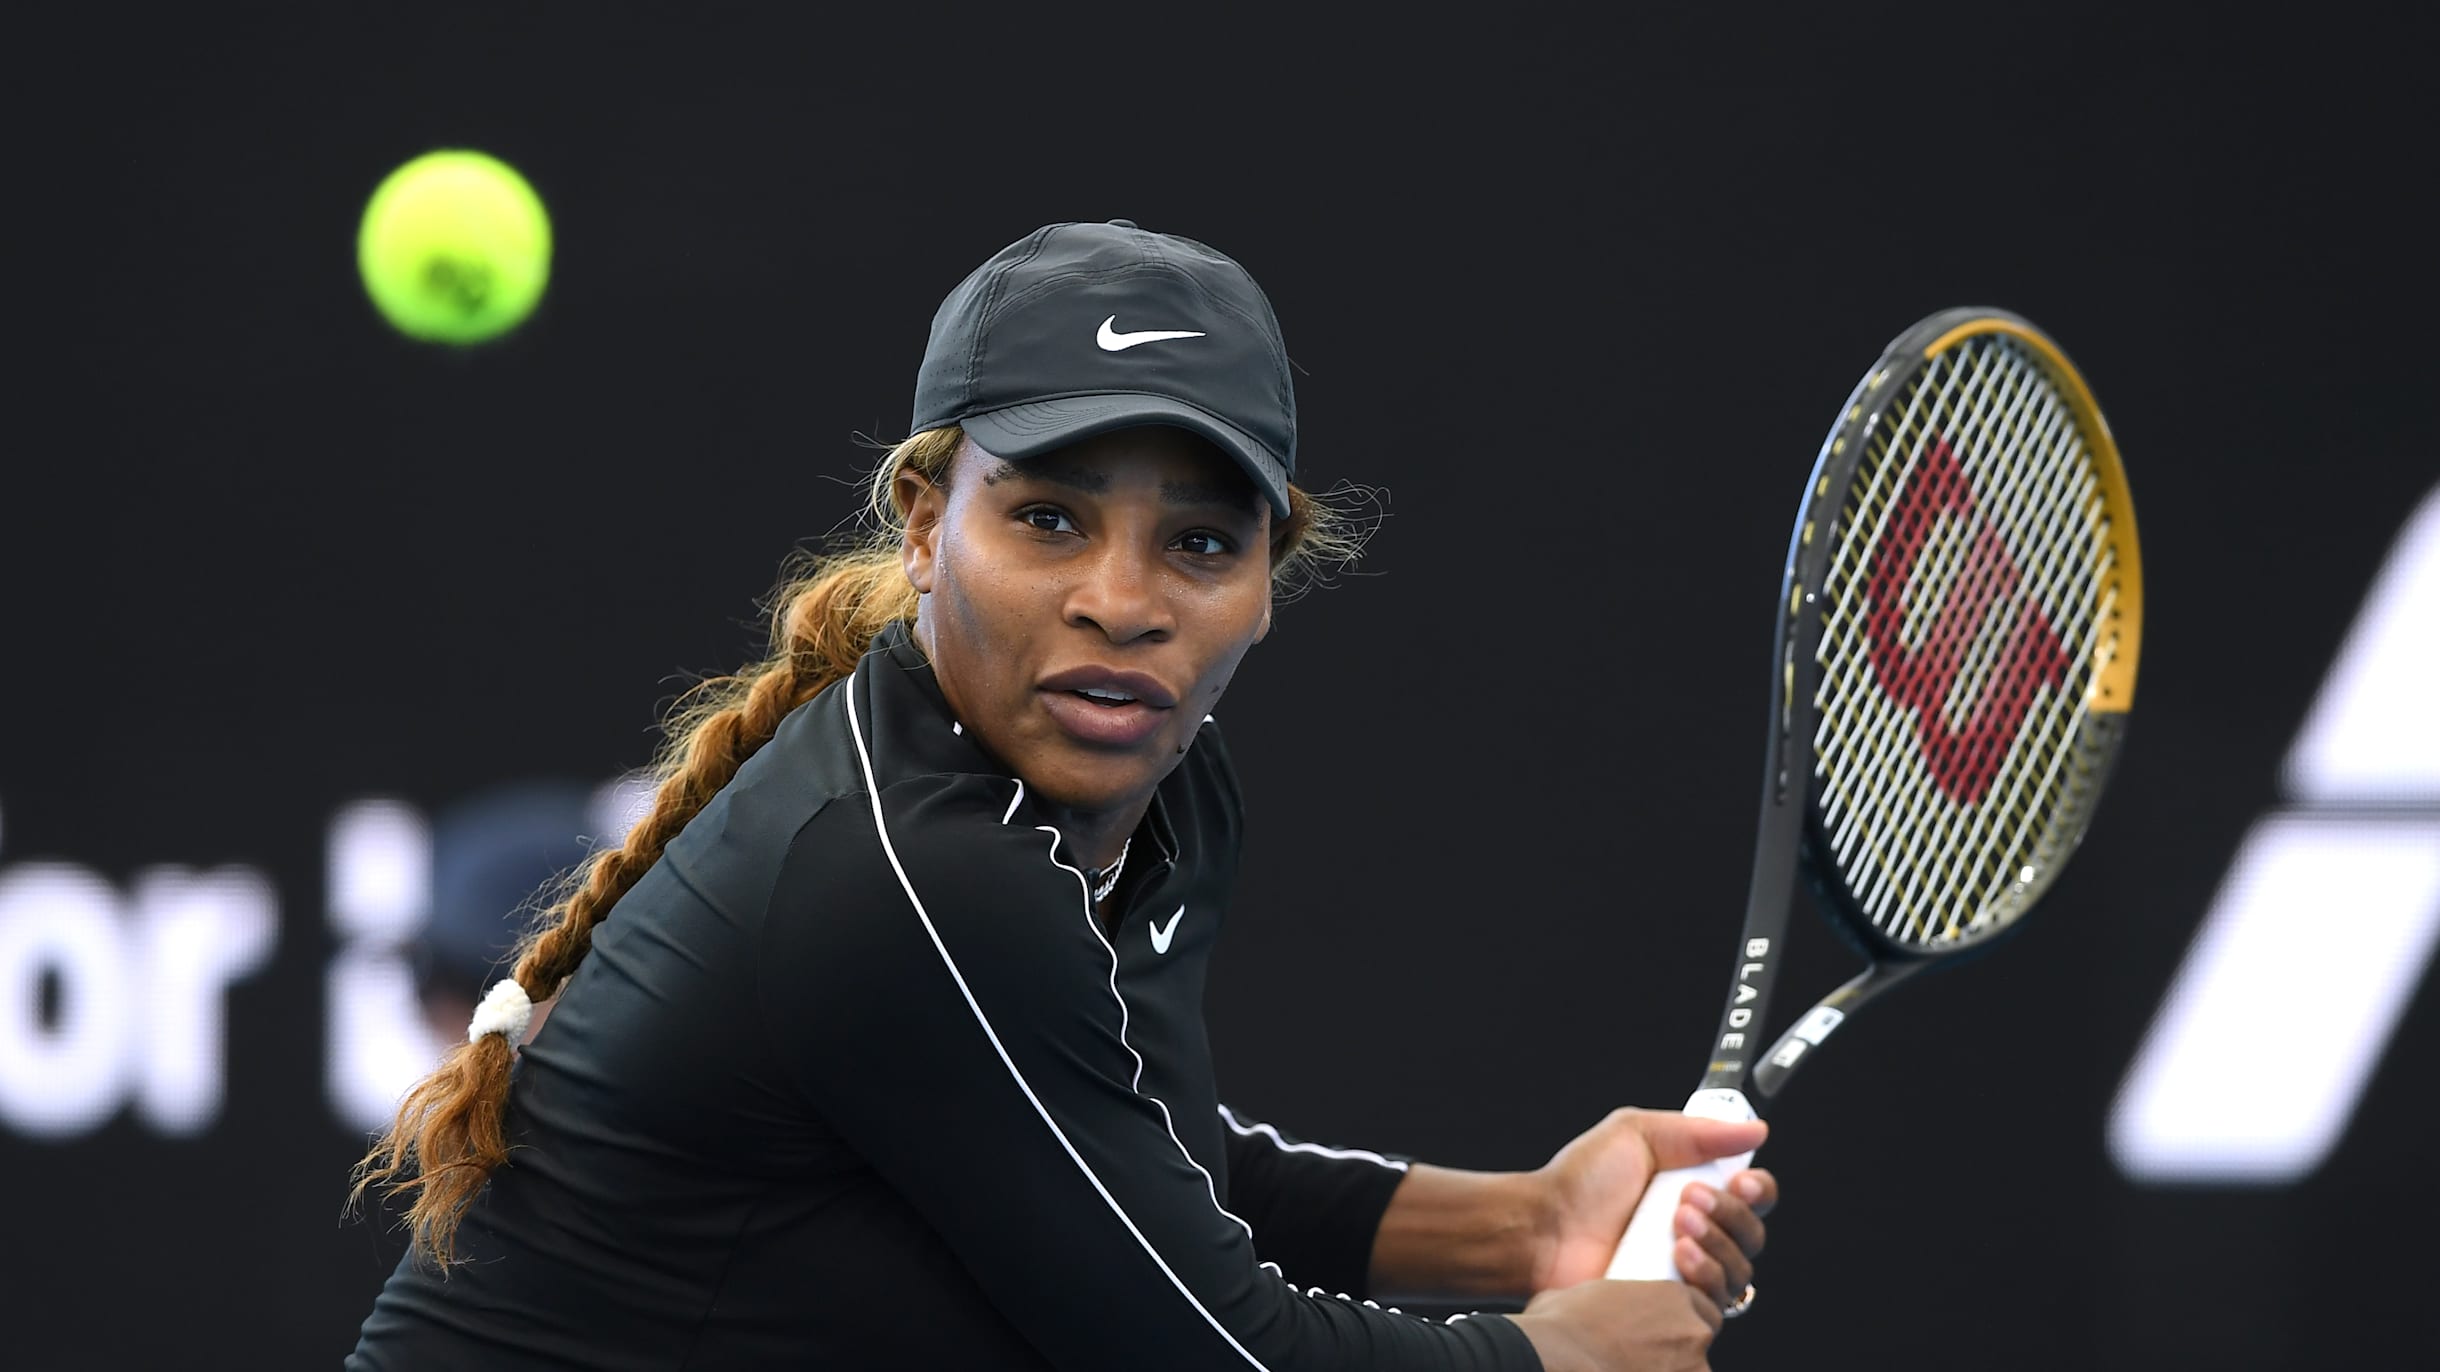 Serena Williams chasing more tennis history at majors, Olympics in 2021